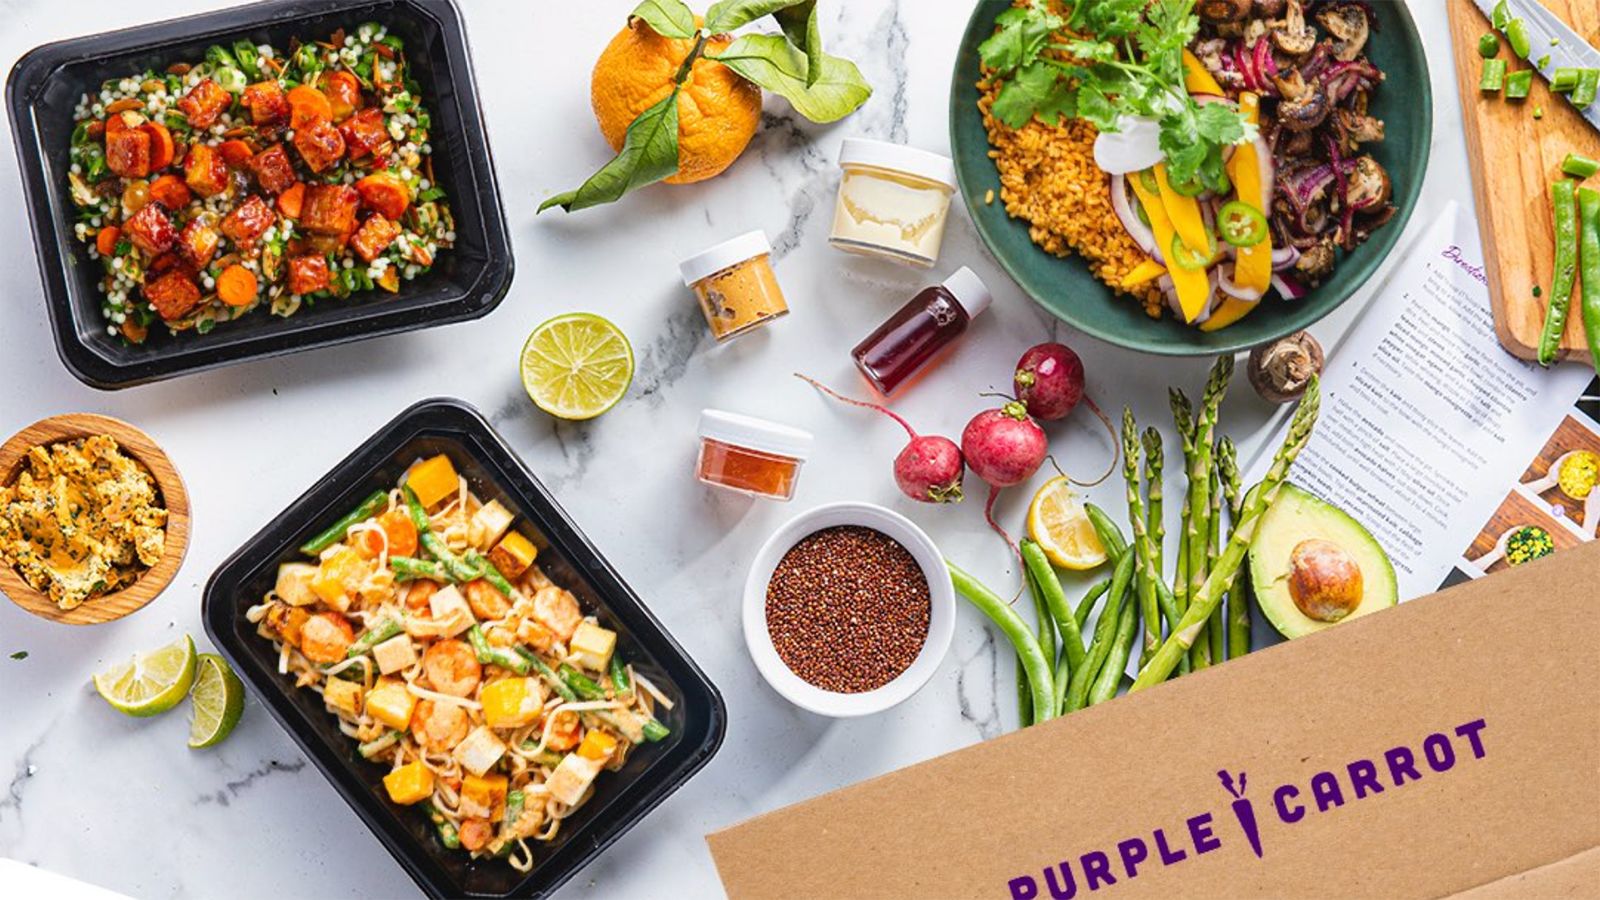 https://media.cnn.com/api/v1/images/stellar/prod/211006115119-best-meal-delivery-service-purple-carrot.jpg?q=w_1600,h_900,x_0,y_0,c_fill